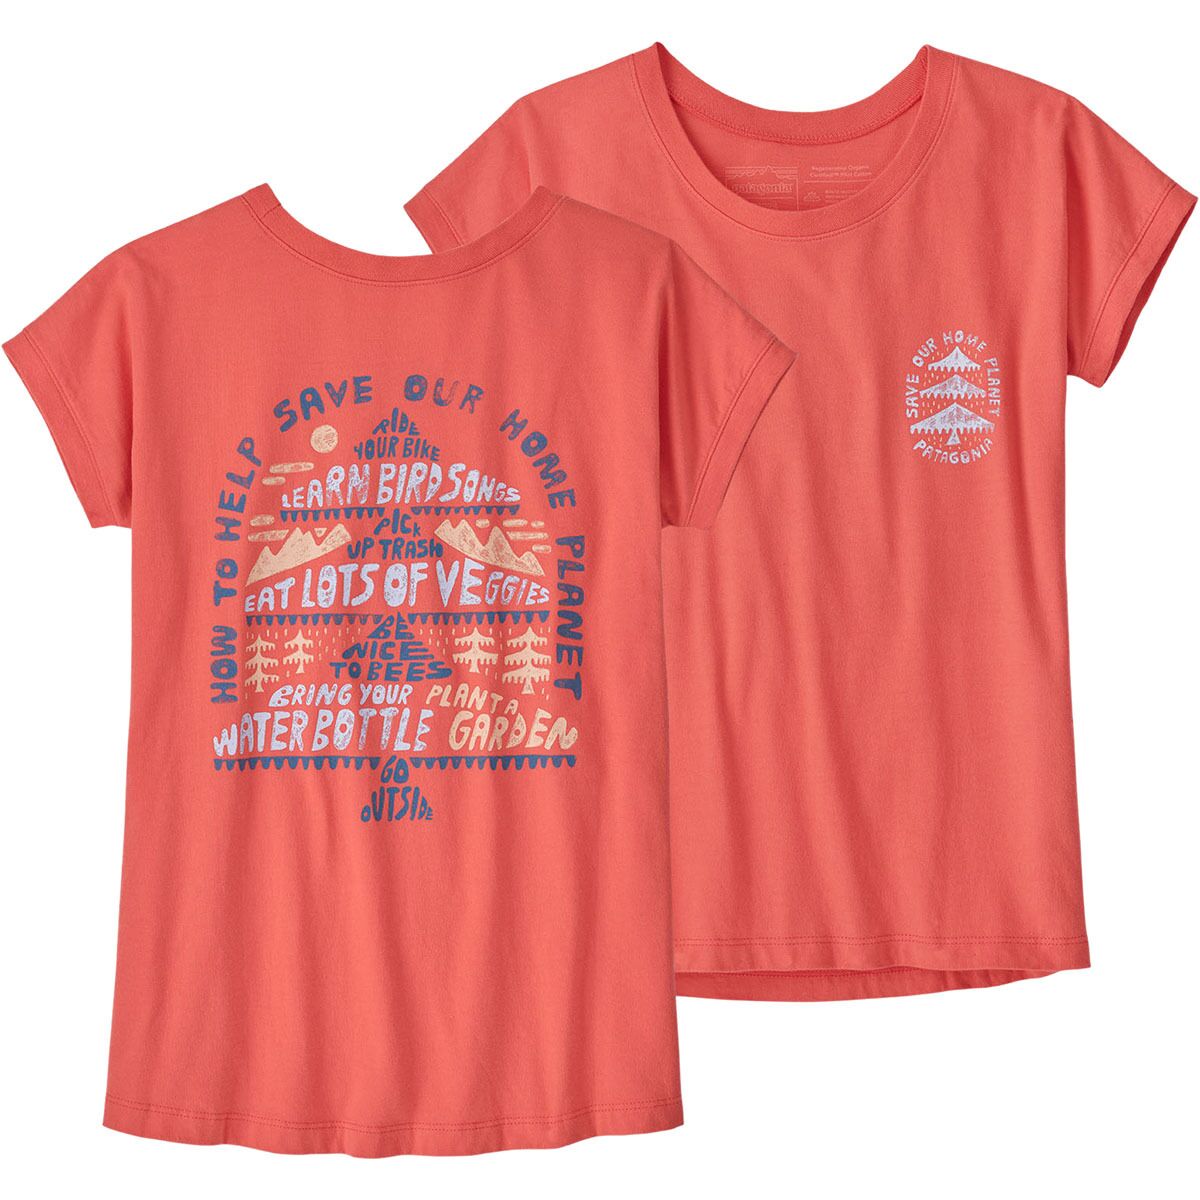 Patagonia Regenerative Graphic Short-Sleeve T-Shirt - Girls' - Kids